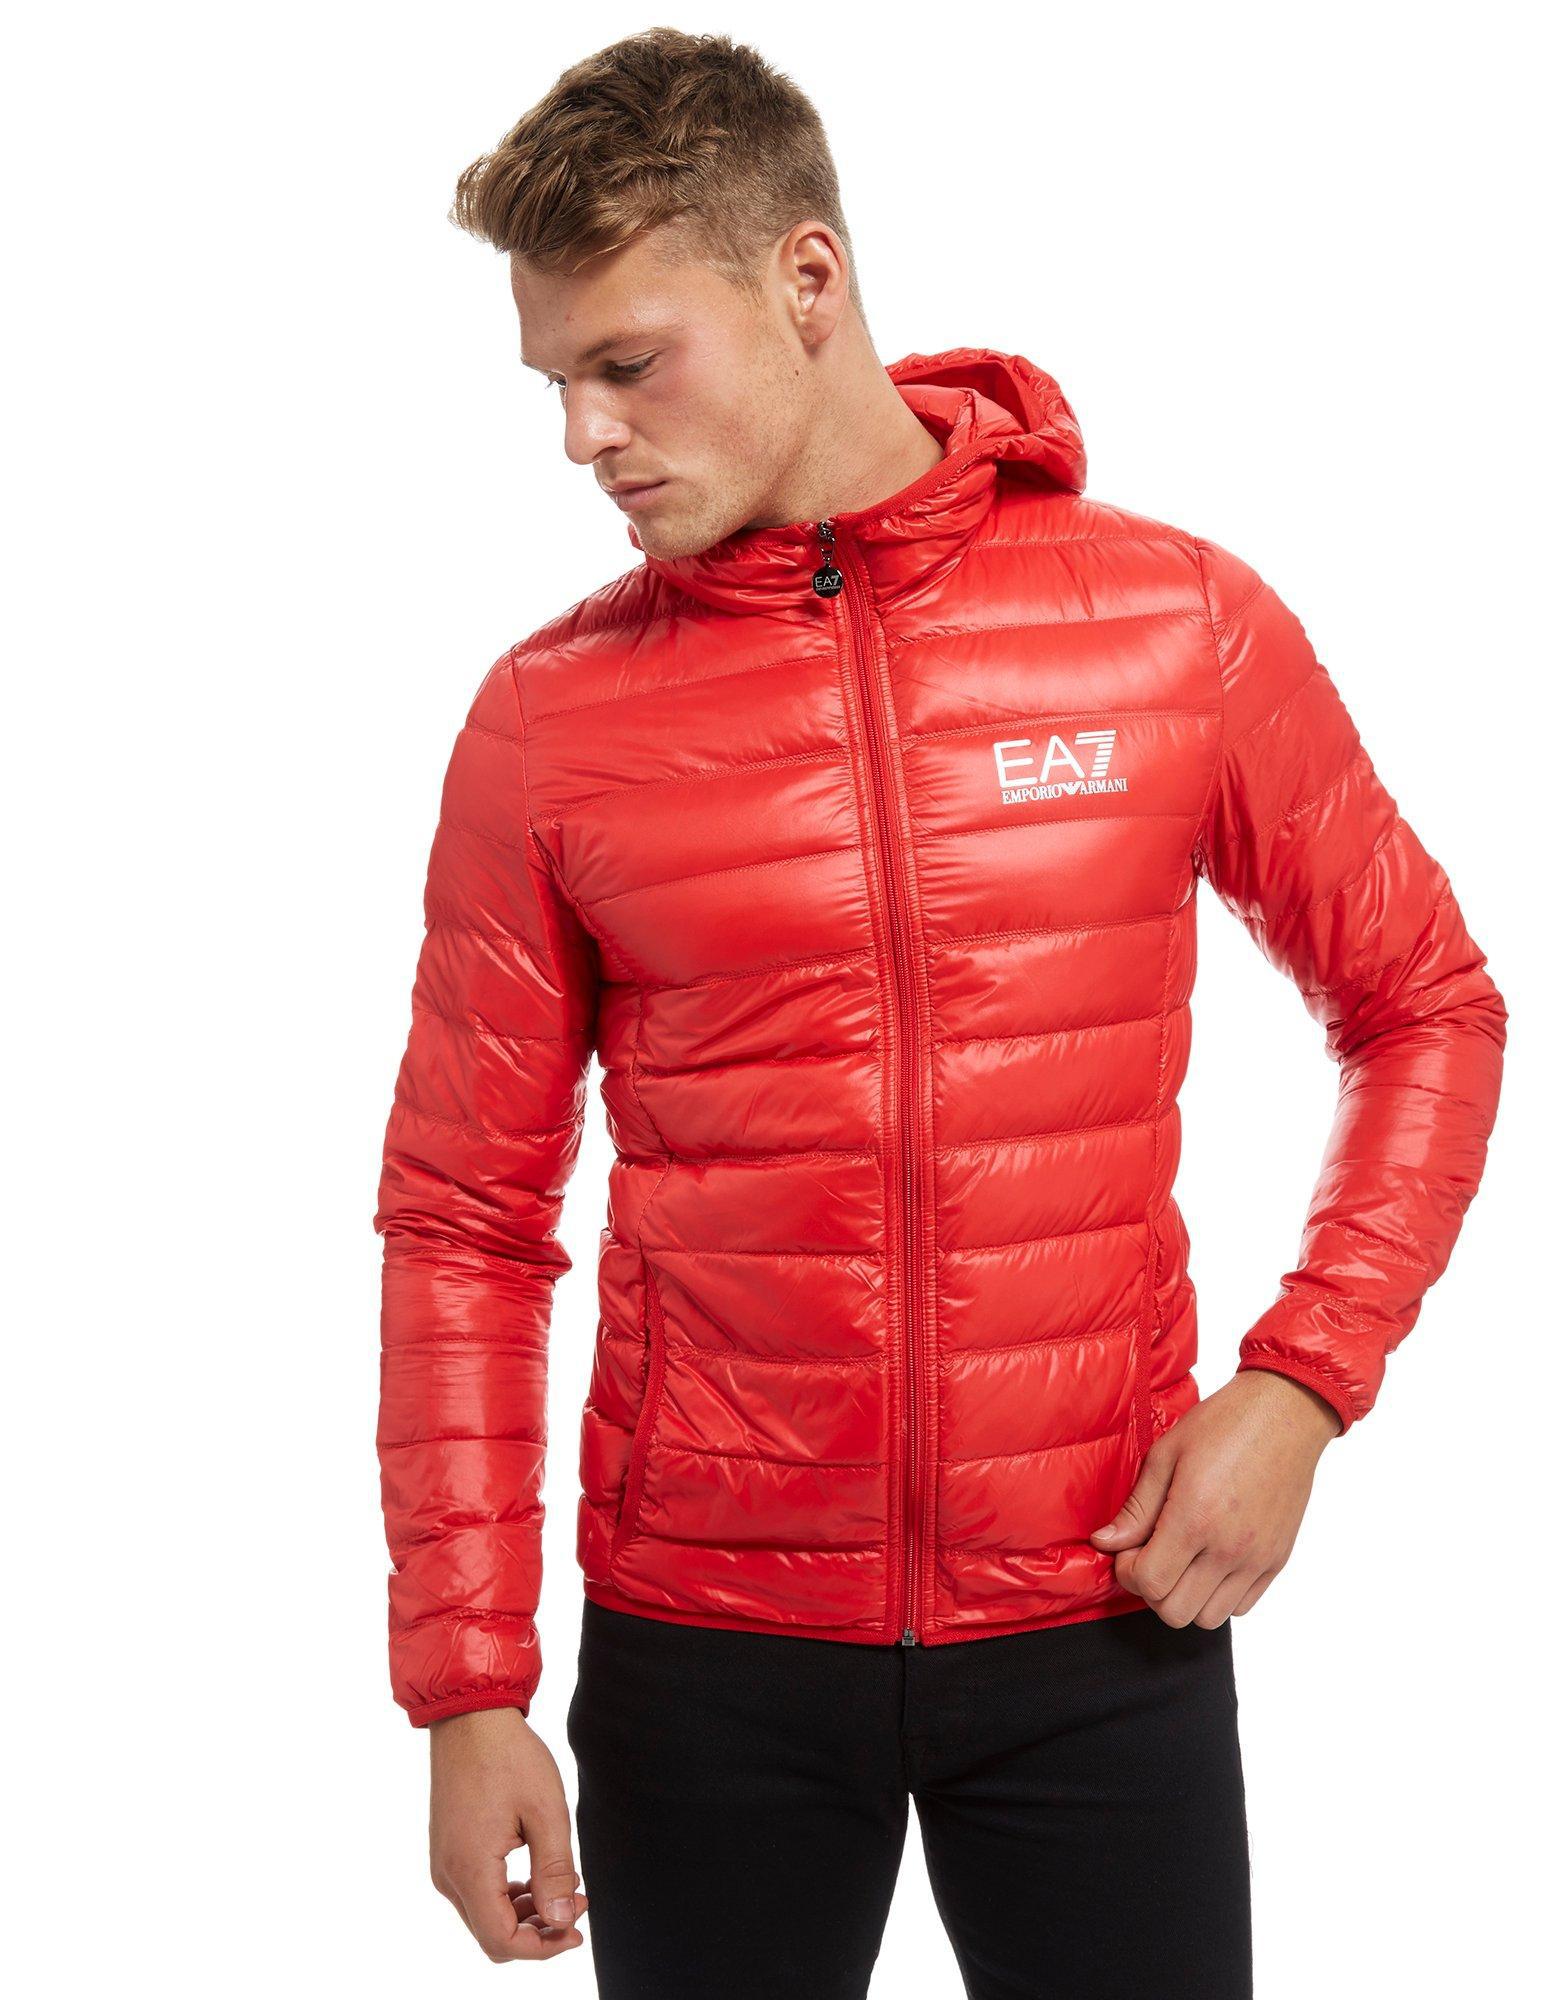 Lyst - Ea7 Down Bubble Jacket in Red for Men